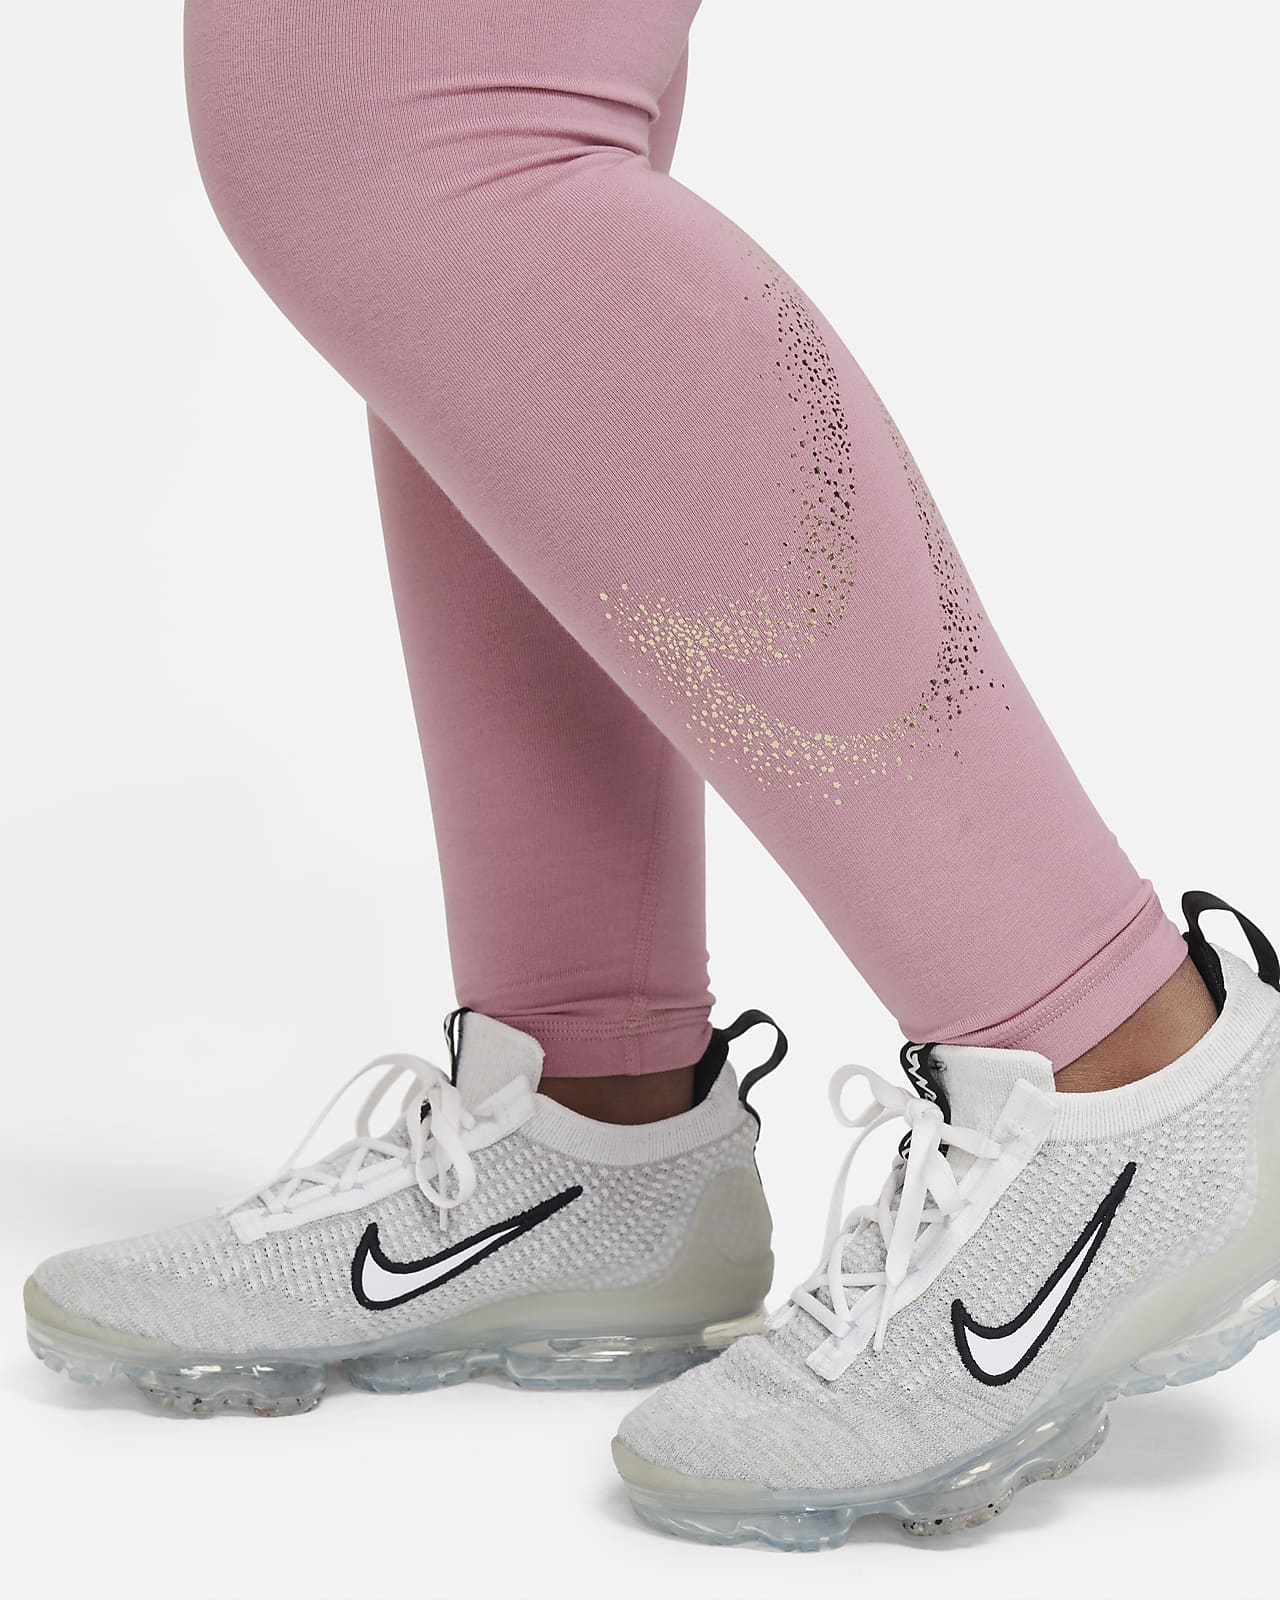 Nike Women's Mid-Rise Essential Swoosh Leggings